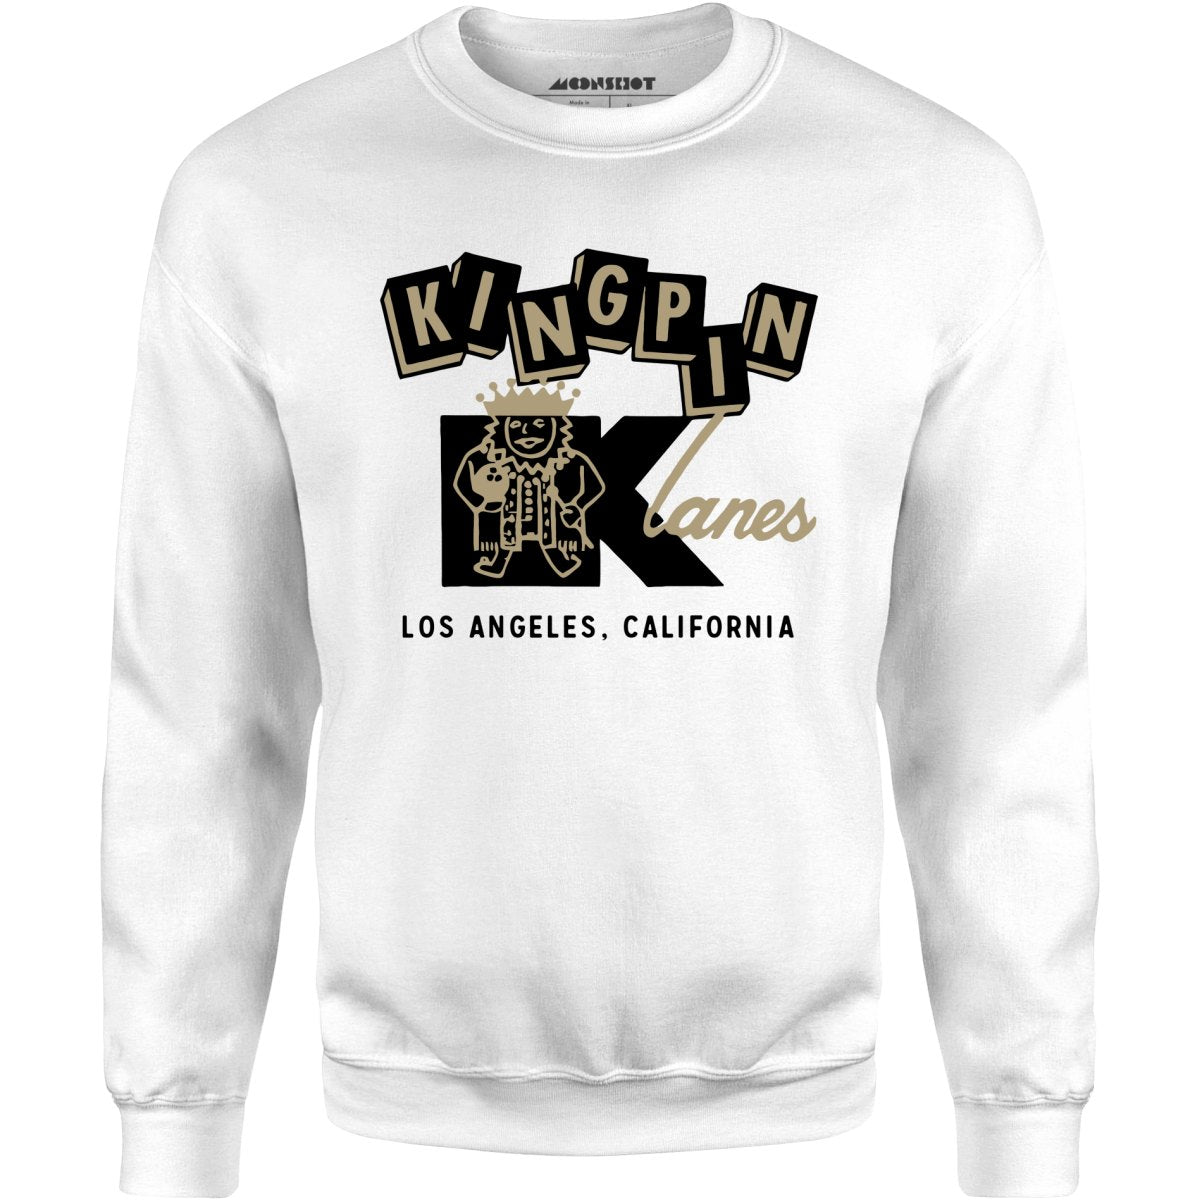 Kingpin Lanes - Los Angeles, CA - Vintage Bowling Alley - Unisex Sweatshirt